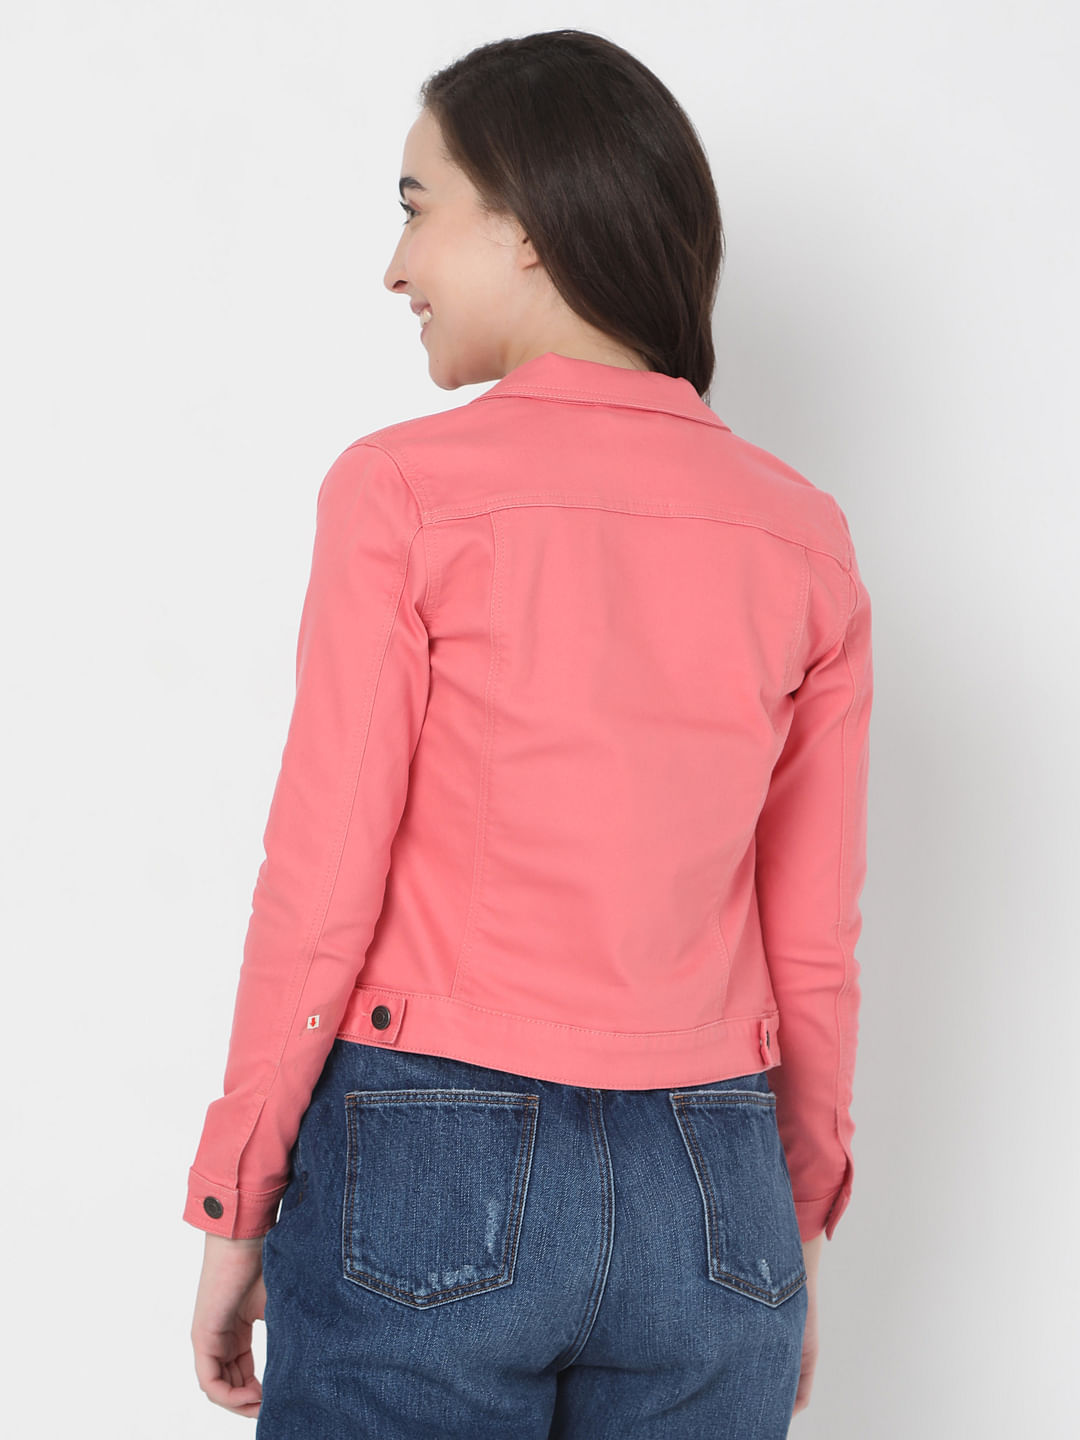 Women Pink Denim Jackets  Buy Women Pink Denim Jackets online in India